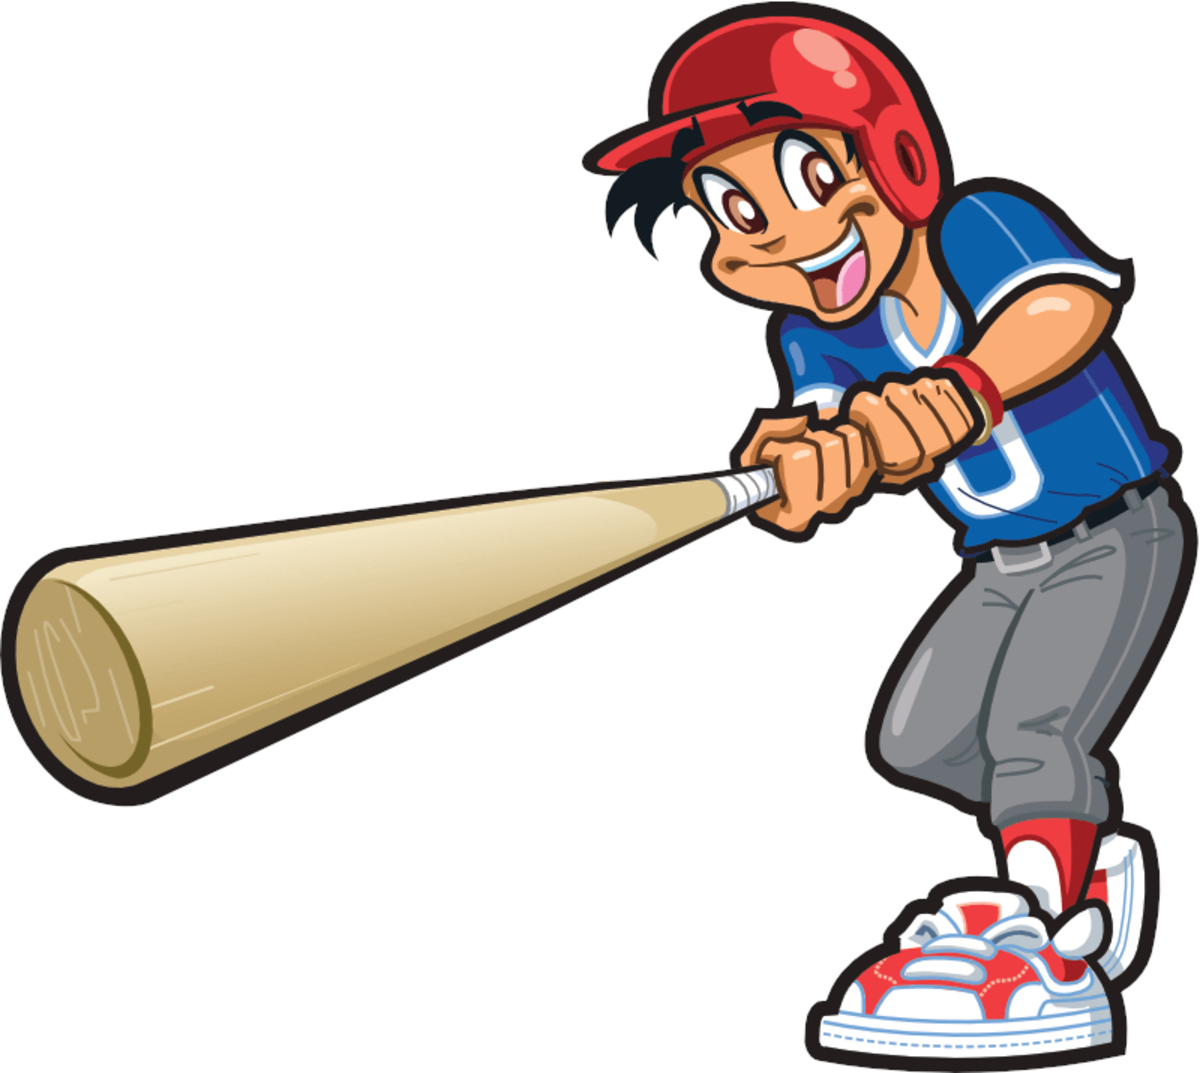 Little League Baseball player swinging the bat.